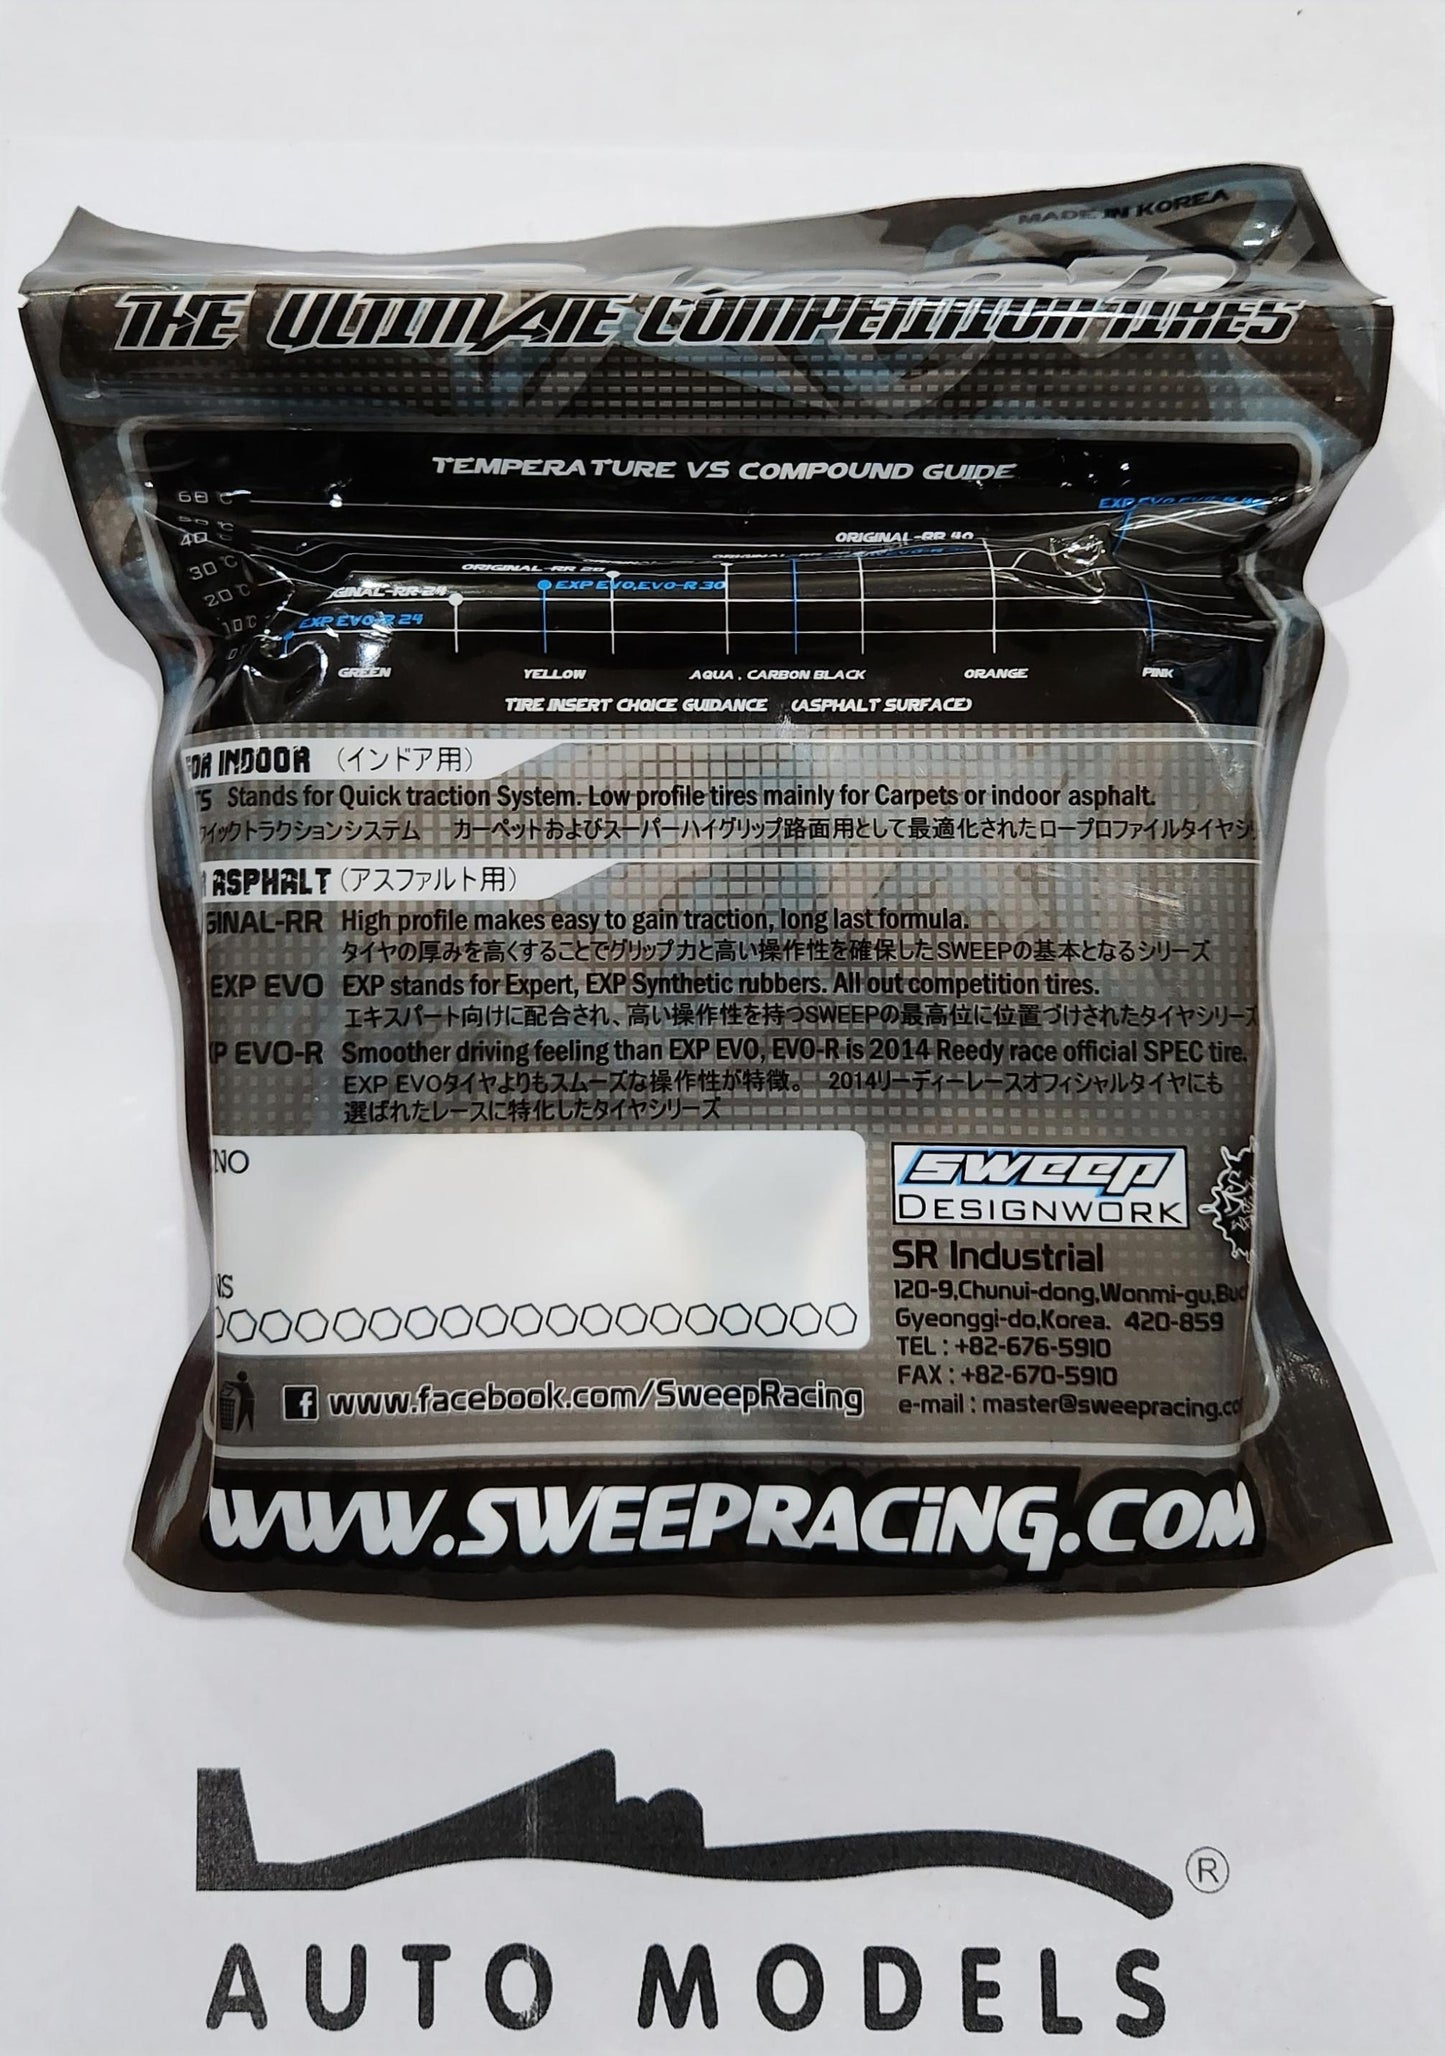 Sweep Racing "R" Series Pre-Mounted Tire Set 36 Deg